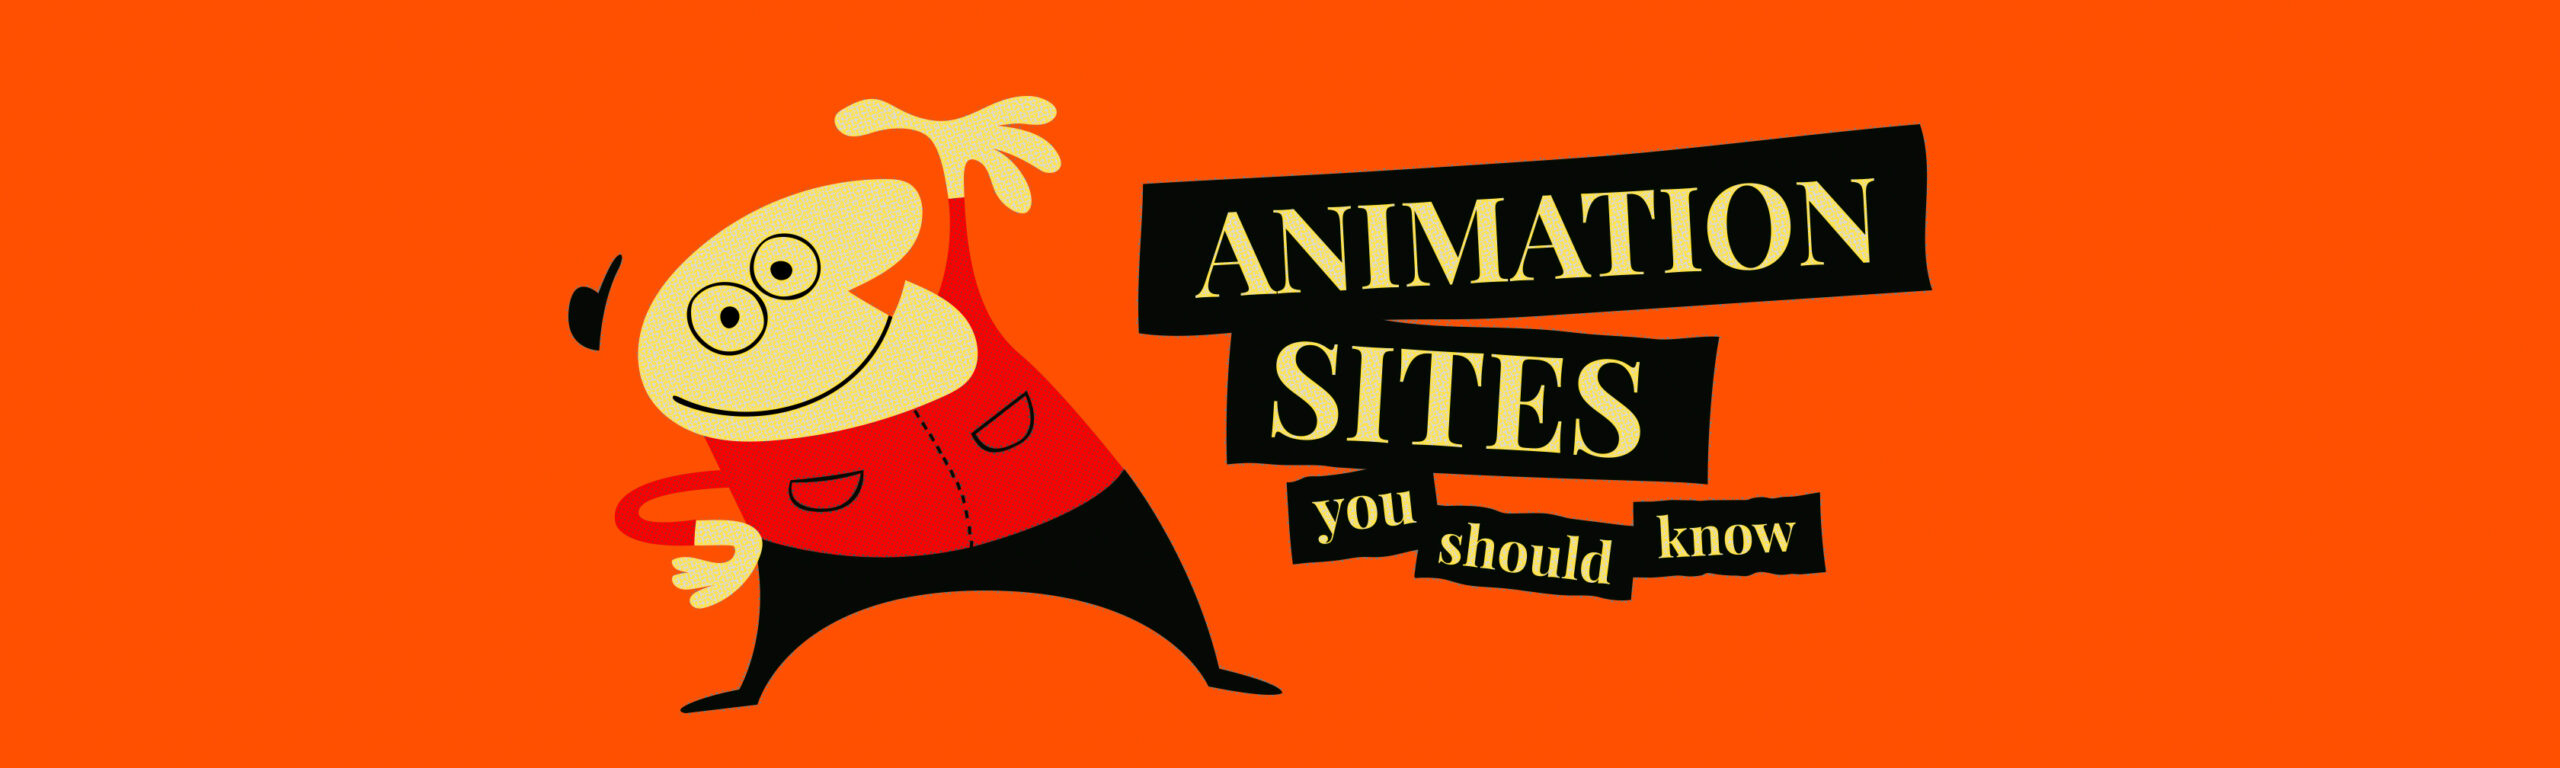 Animation-Sites-BG